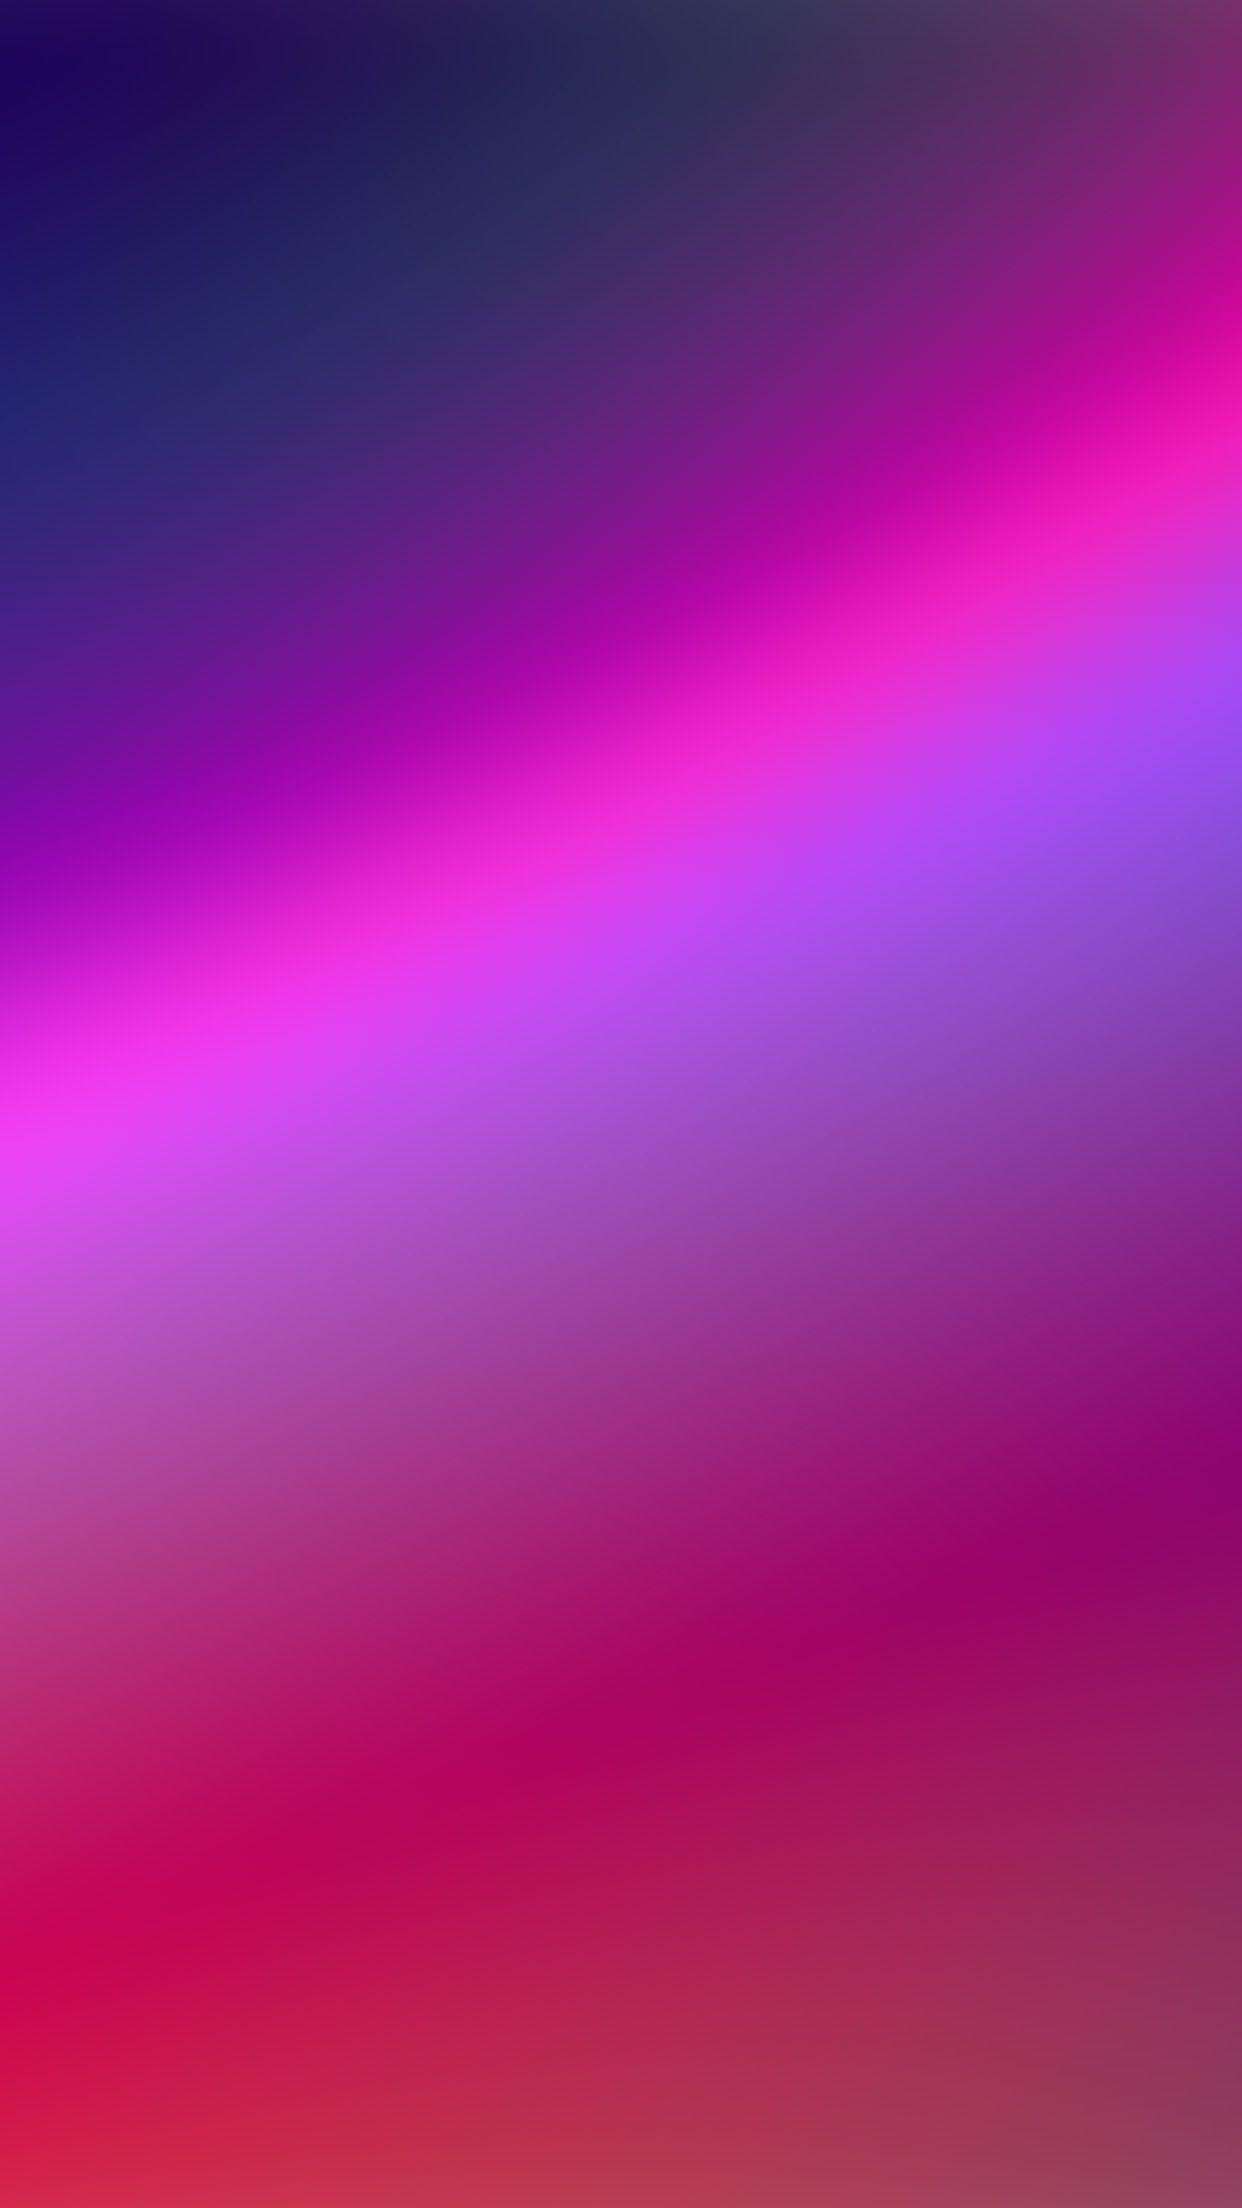 Dark Pink iPhone Wallpapers - Top Free Dark Pink iPhone Backgrounds ...